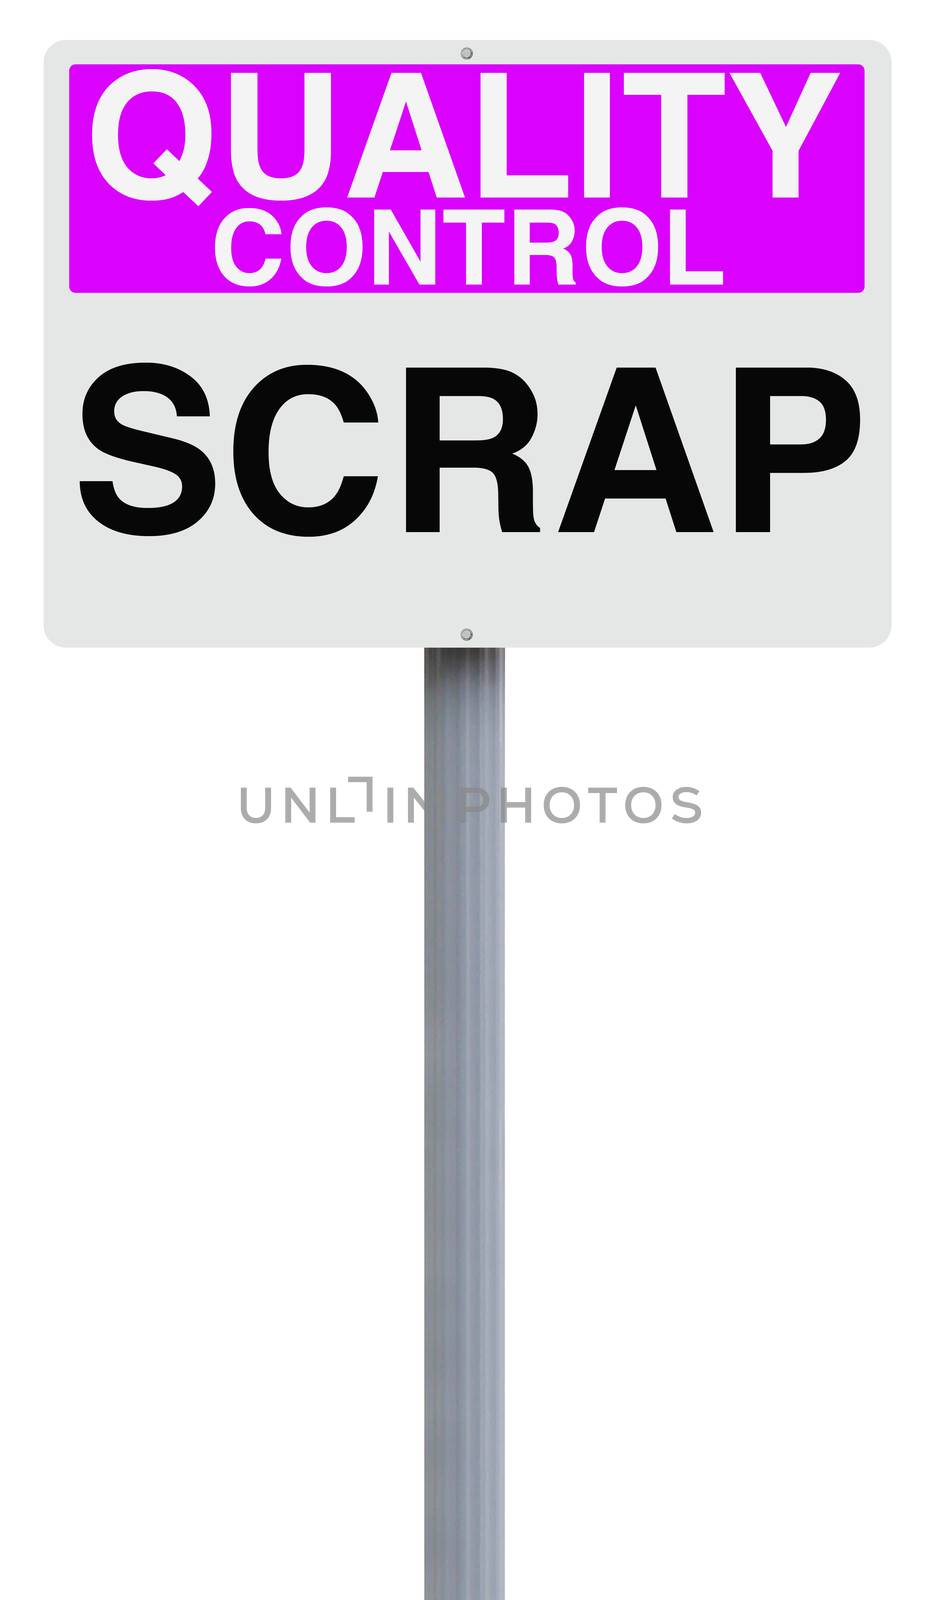 A quality control sign indicating Scrap